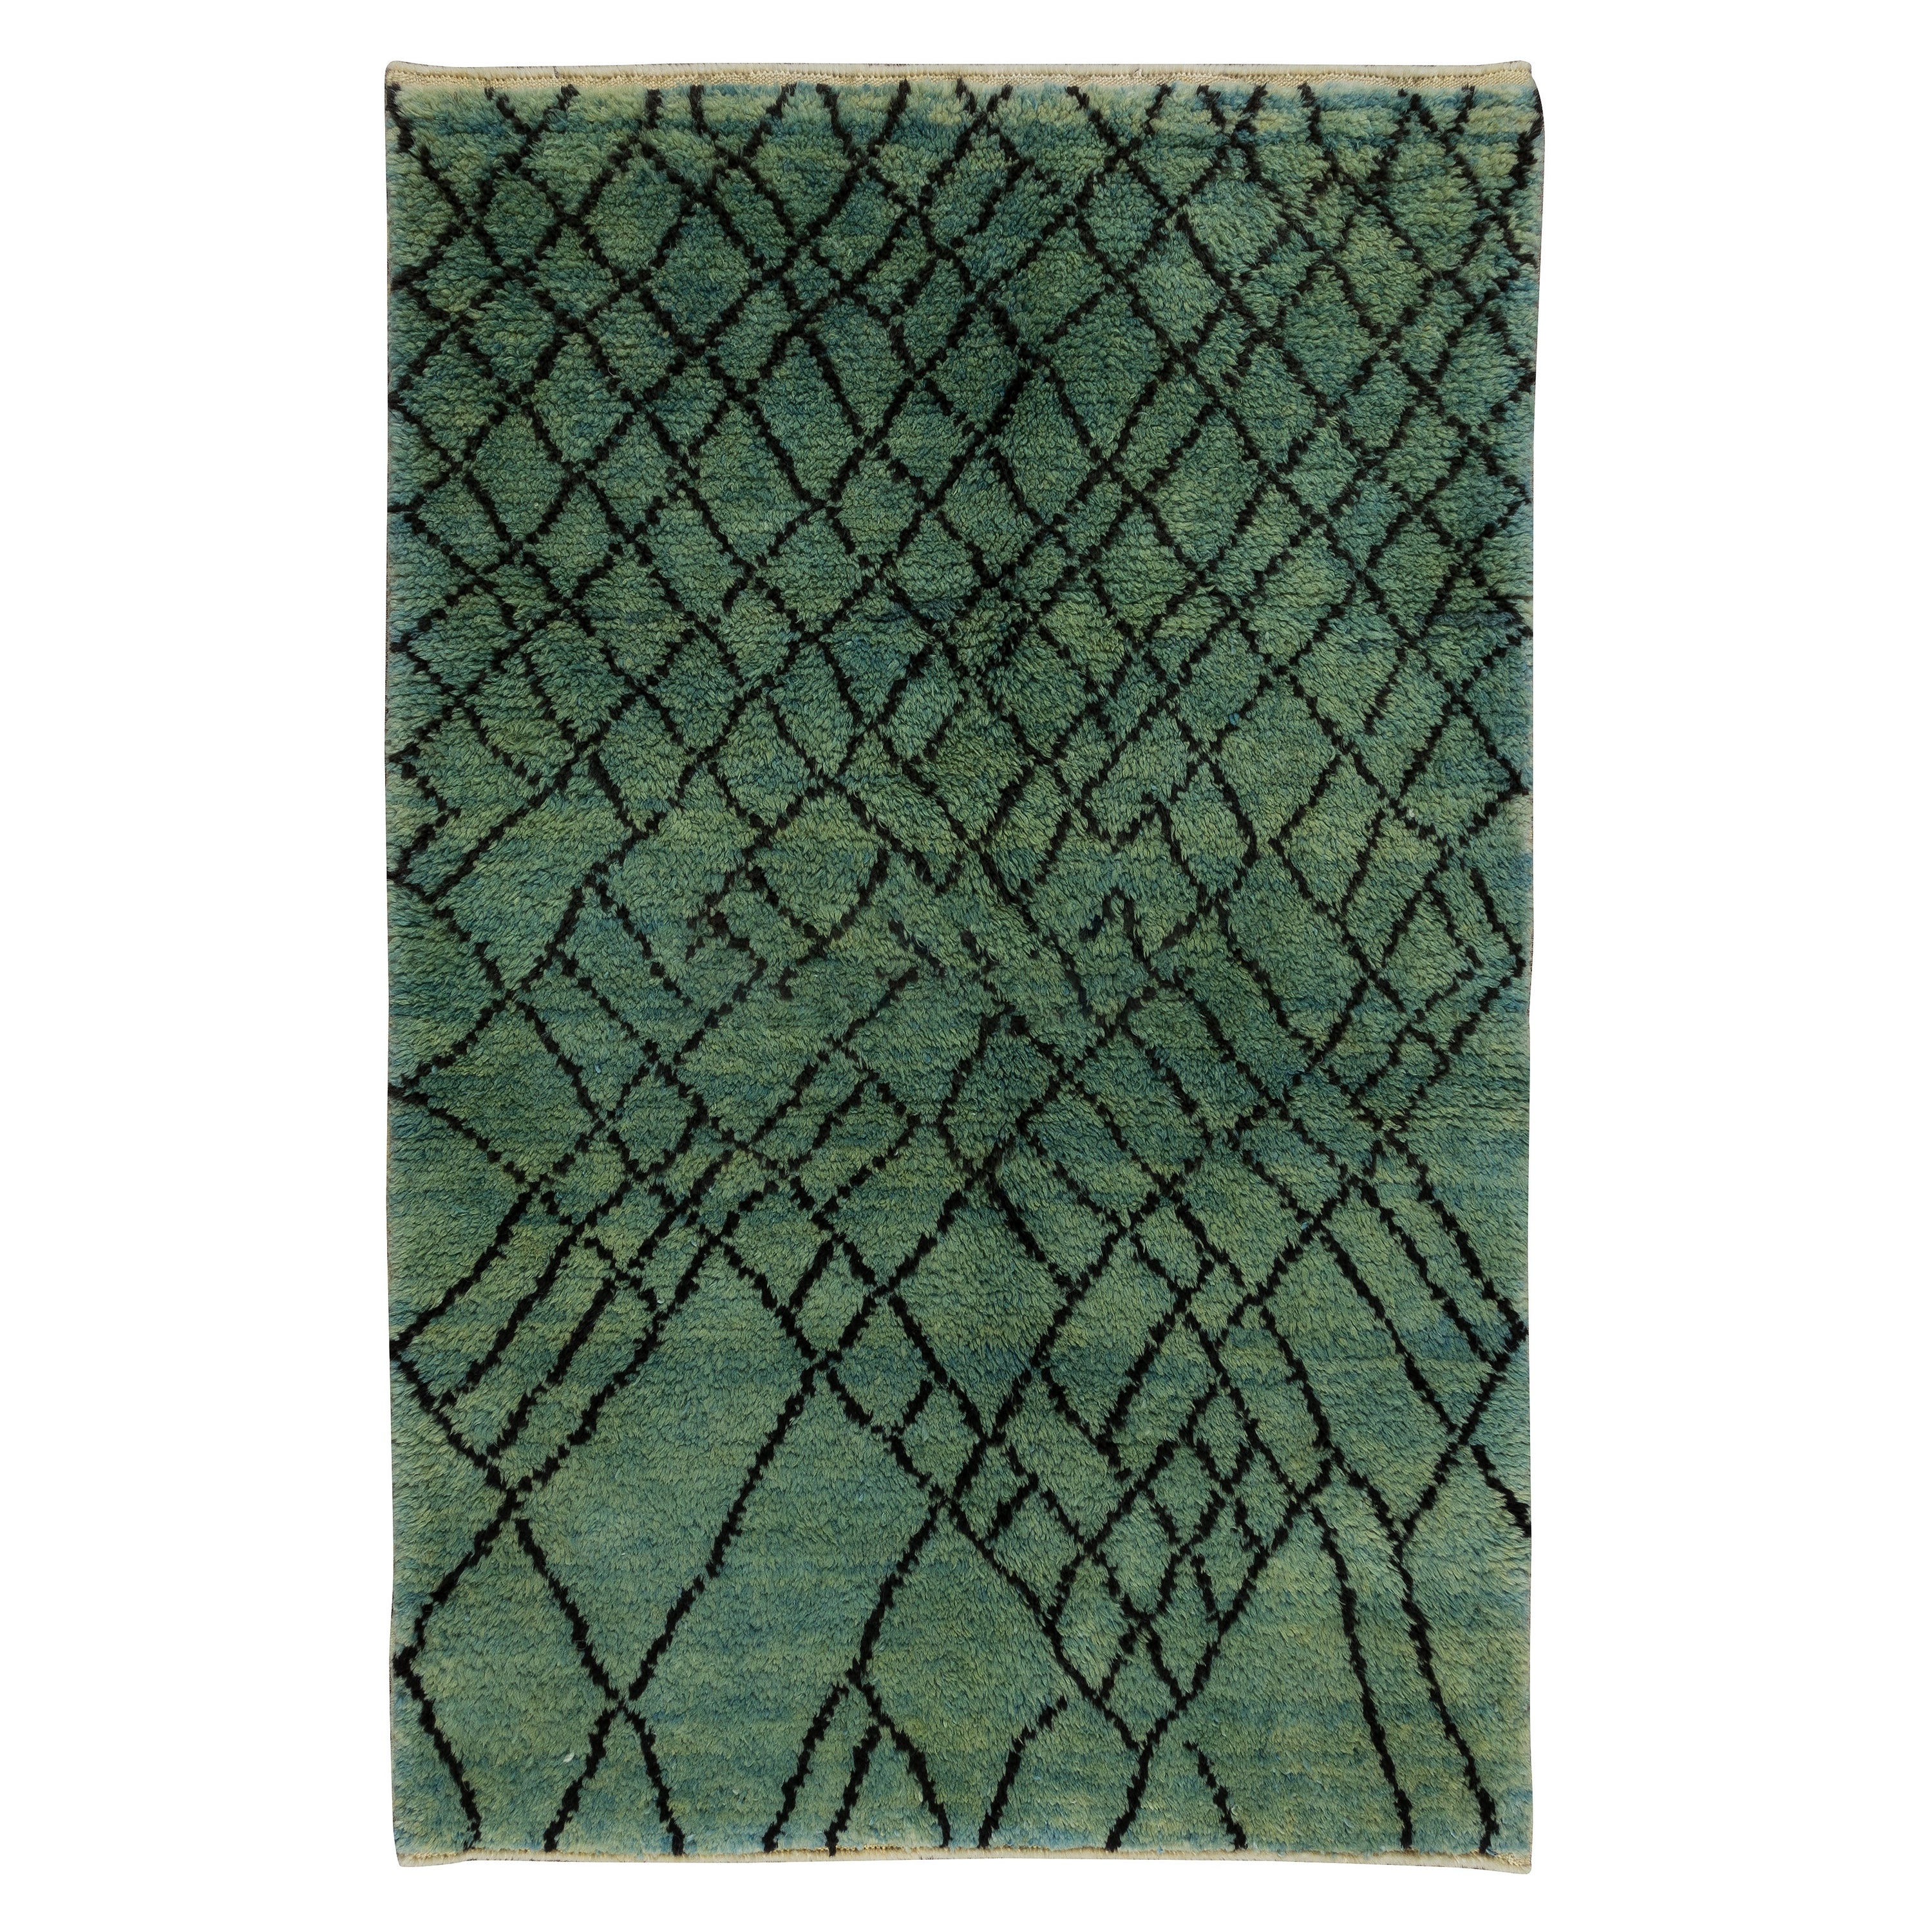 4.2x6 Ft Handmade Moroccan Rug with Diamond Design, Blue Berber Carpet, All Wool (tapis berbère bleu)